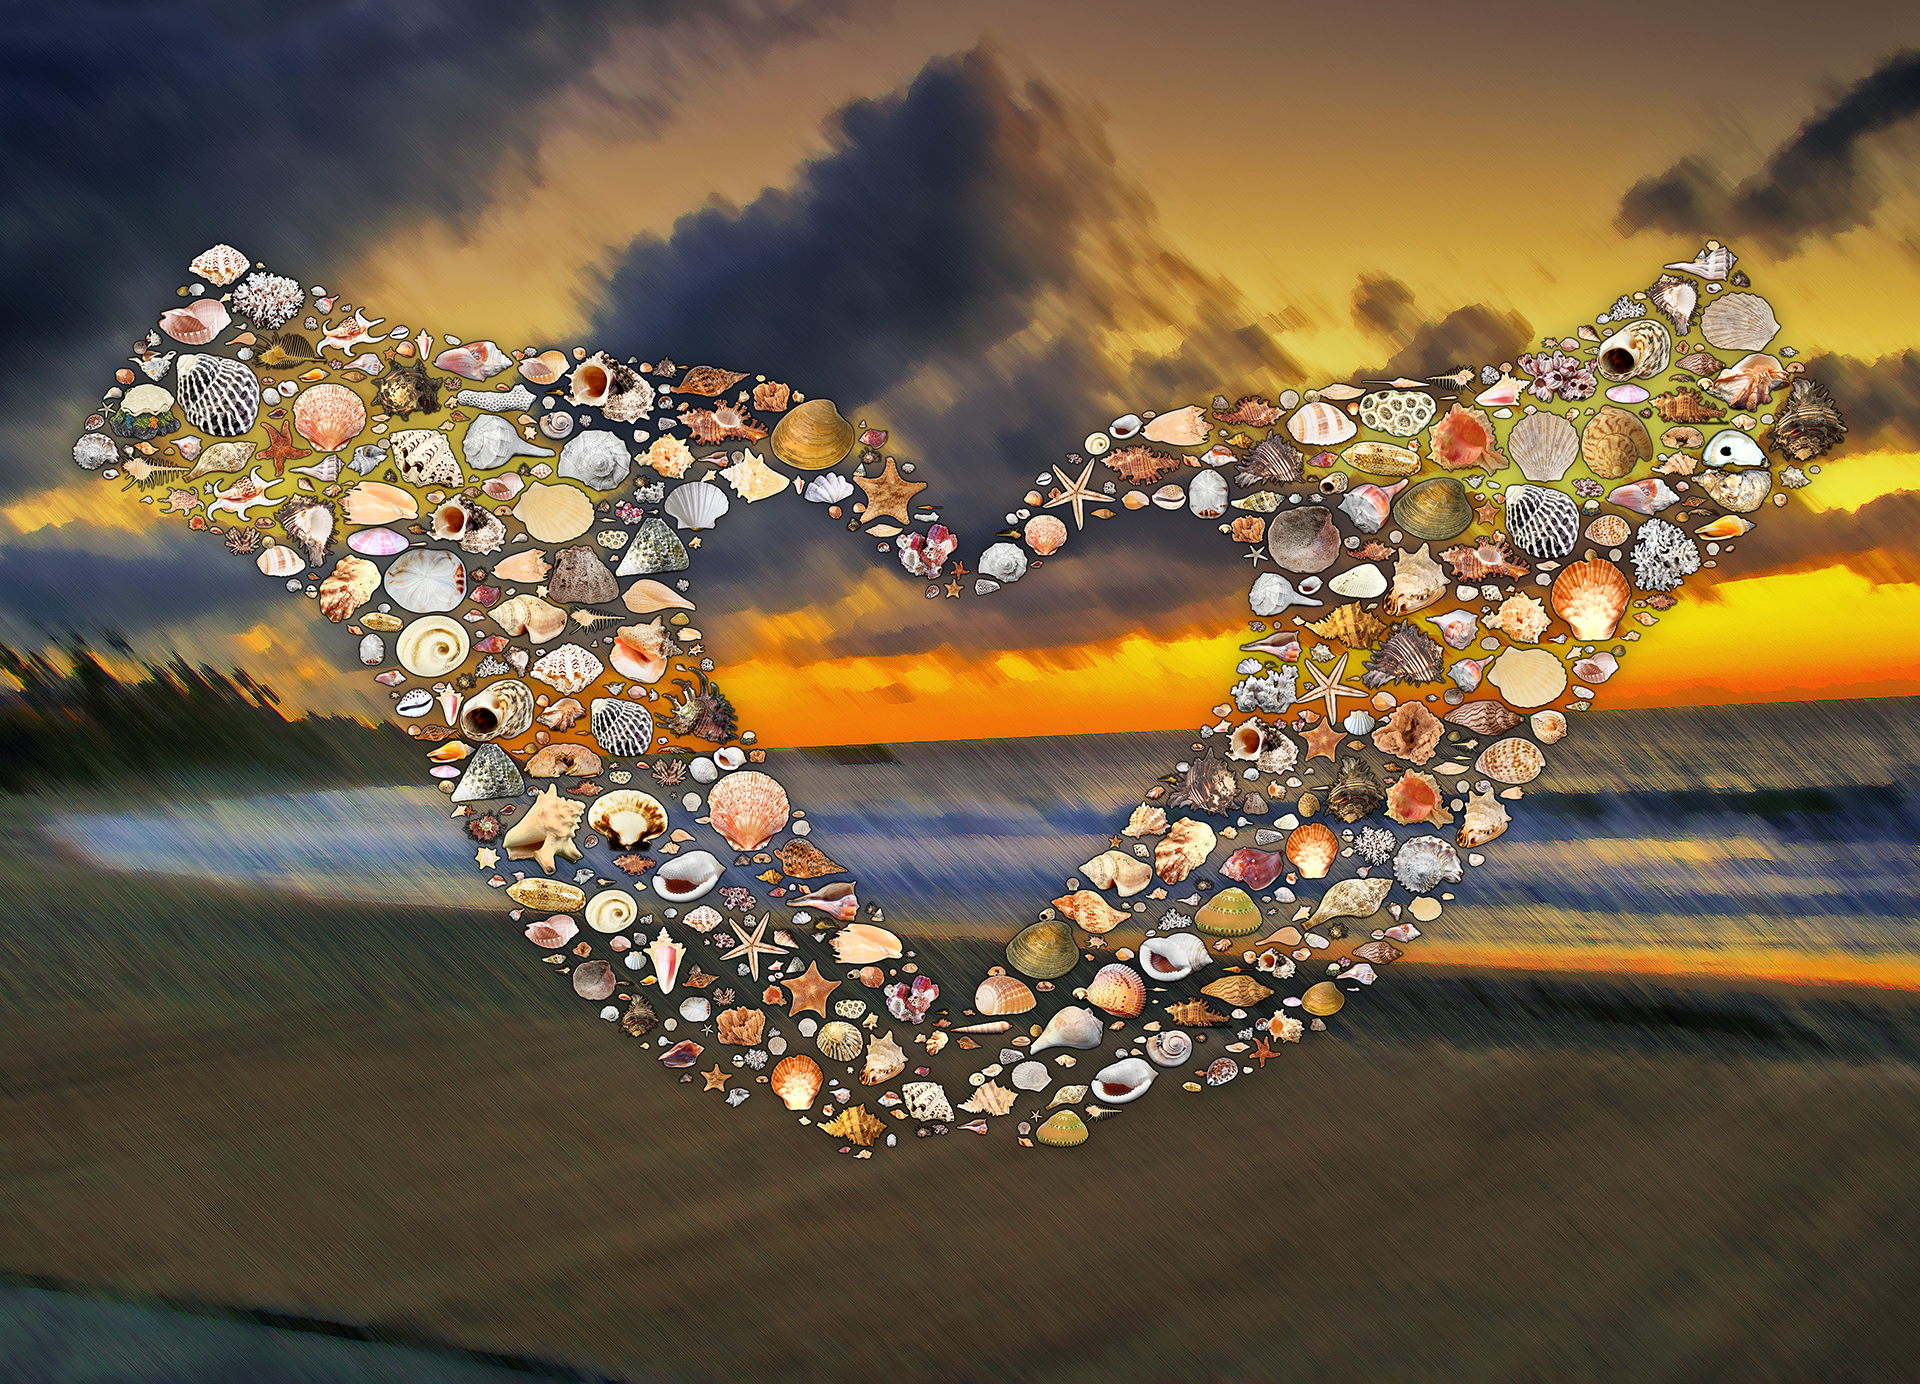 photo mosaic created using 160 specially designed seashell images